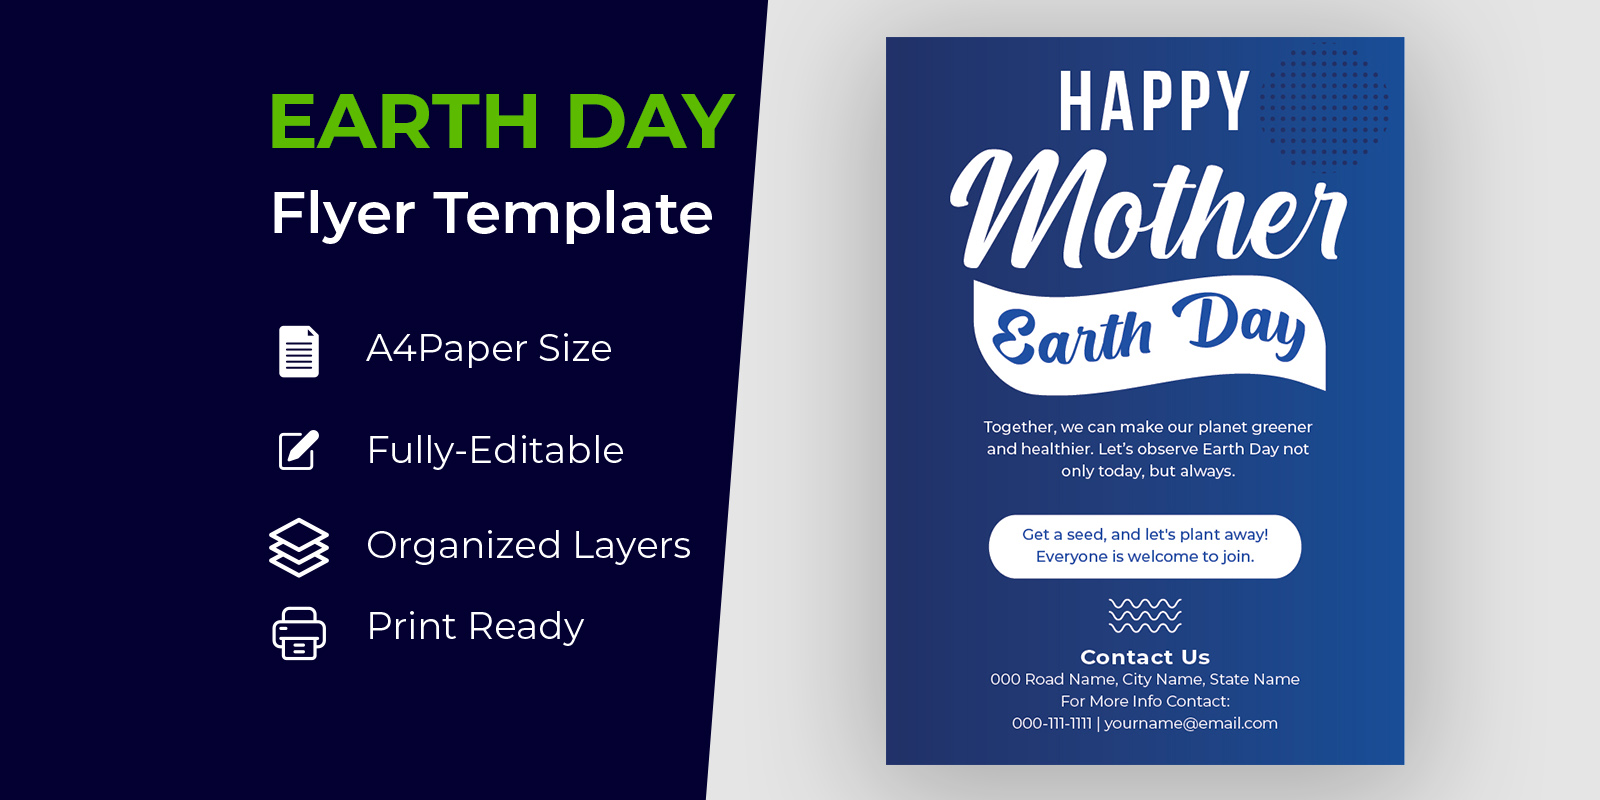 Decorative Happy Earth Day Flyer Design Corporate identity template